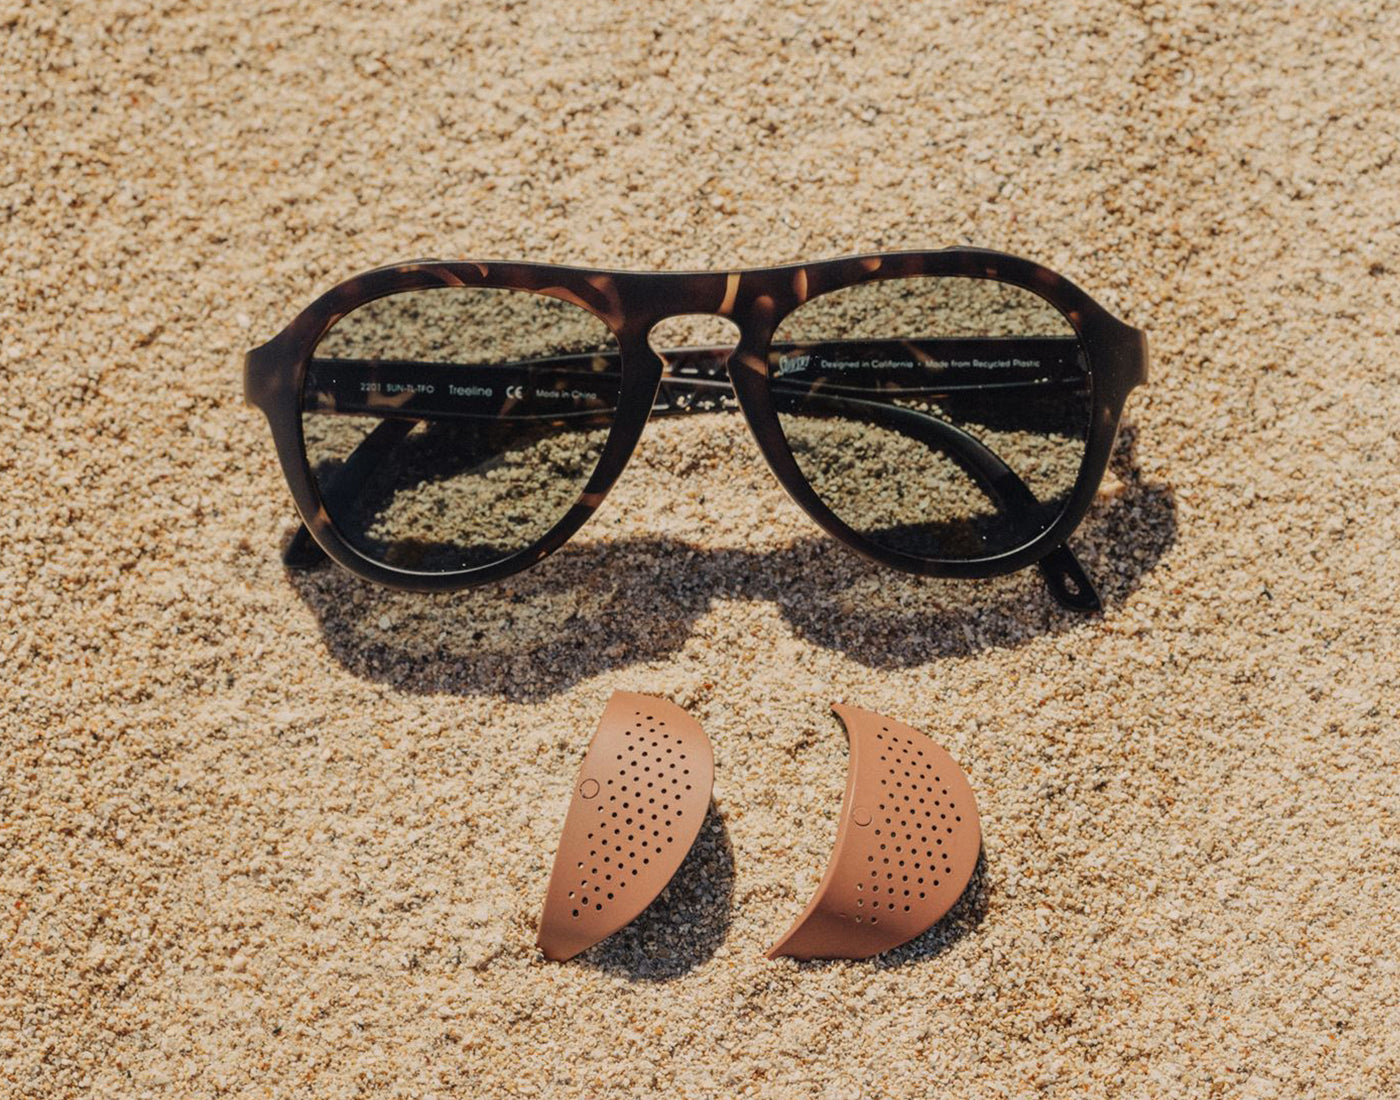 pair of sunski treeline sun shields laying in the sand below sunski treeline sunglasses